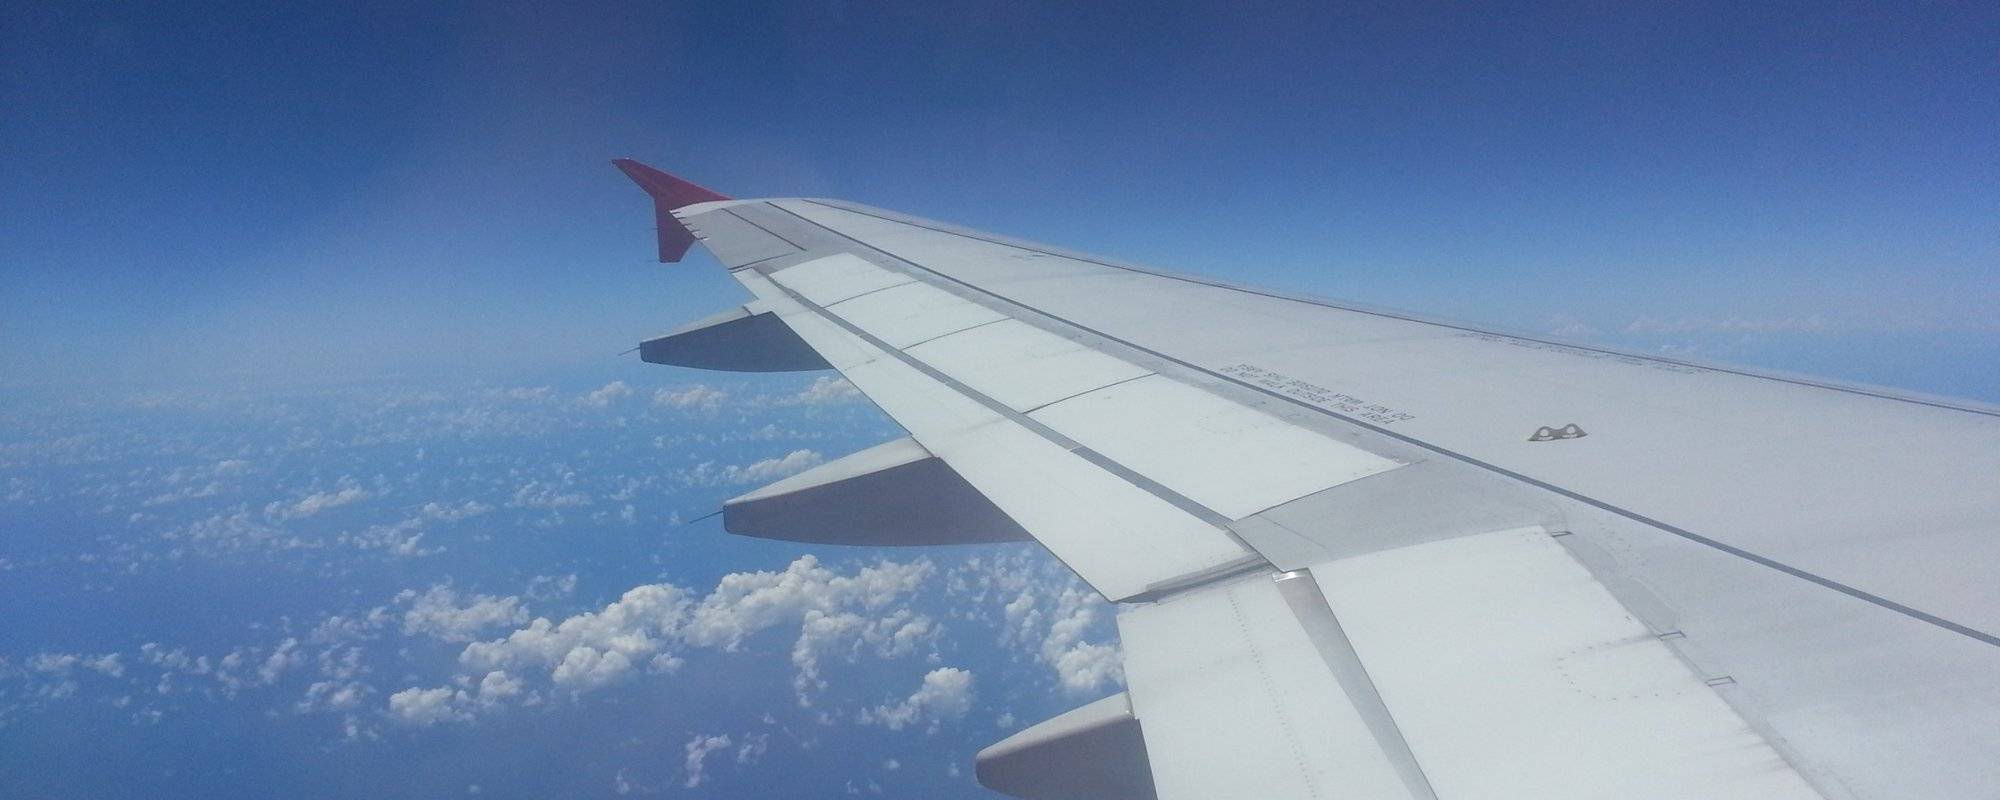 [Philiipines, Manila #1]  In the AirAsia Flights to the Philippines 필리핀으로 떠나는 에어아시아 비행기 안에서 